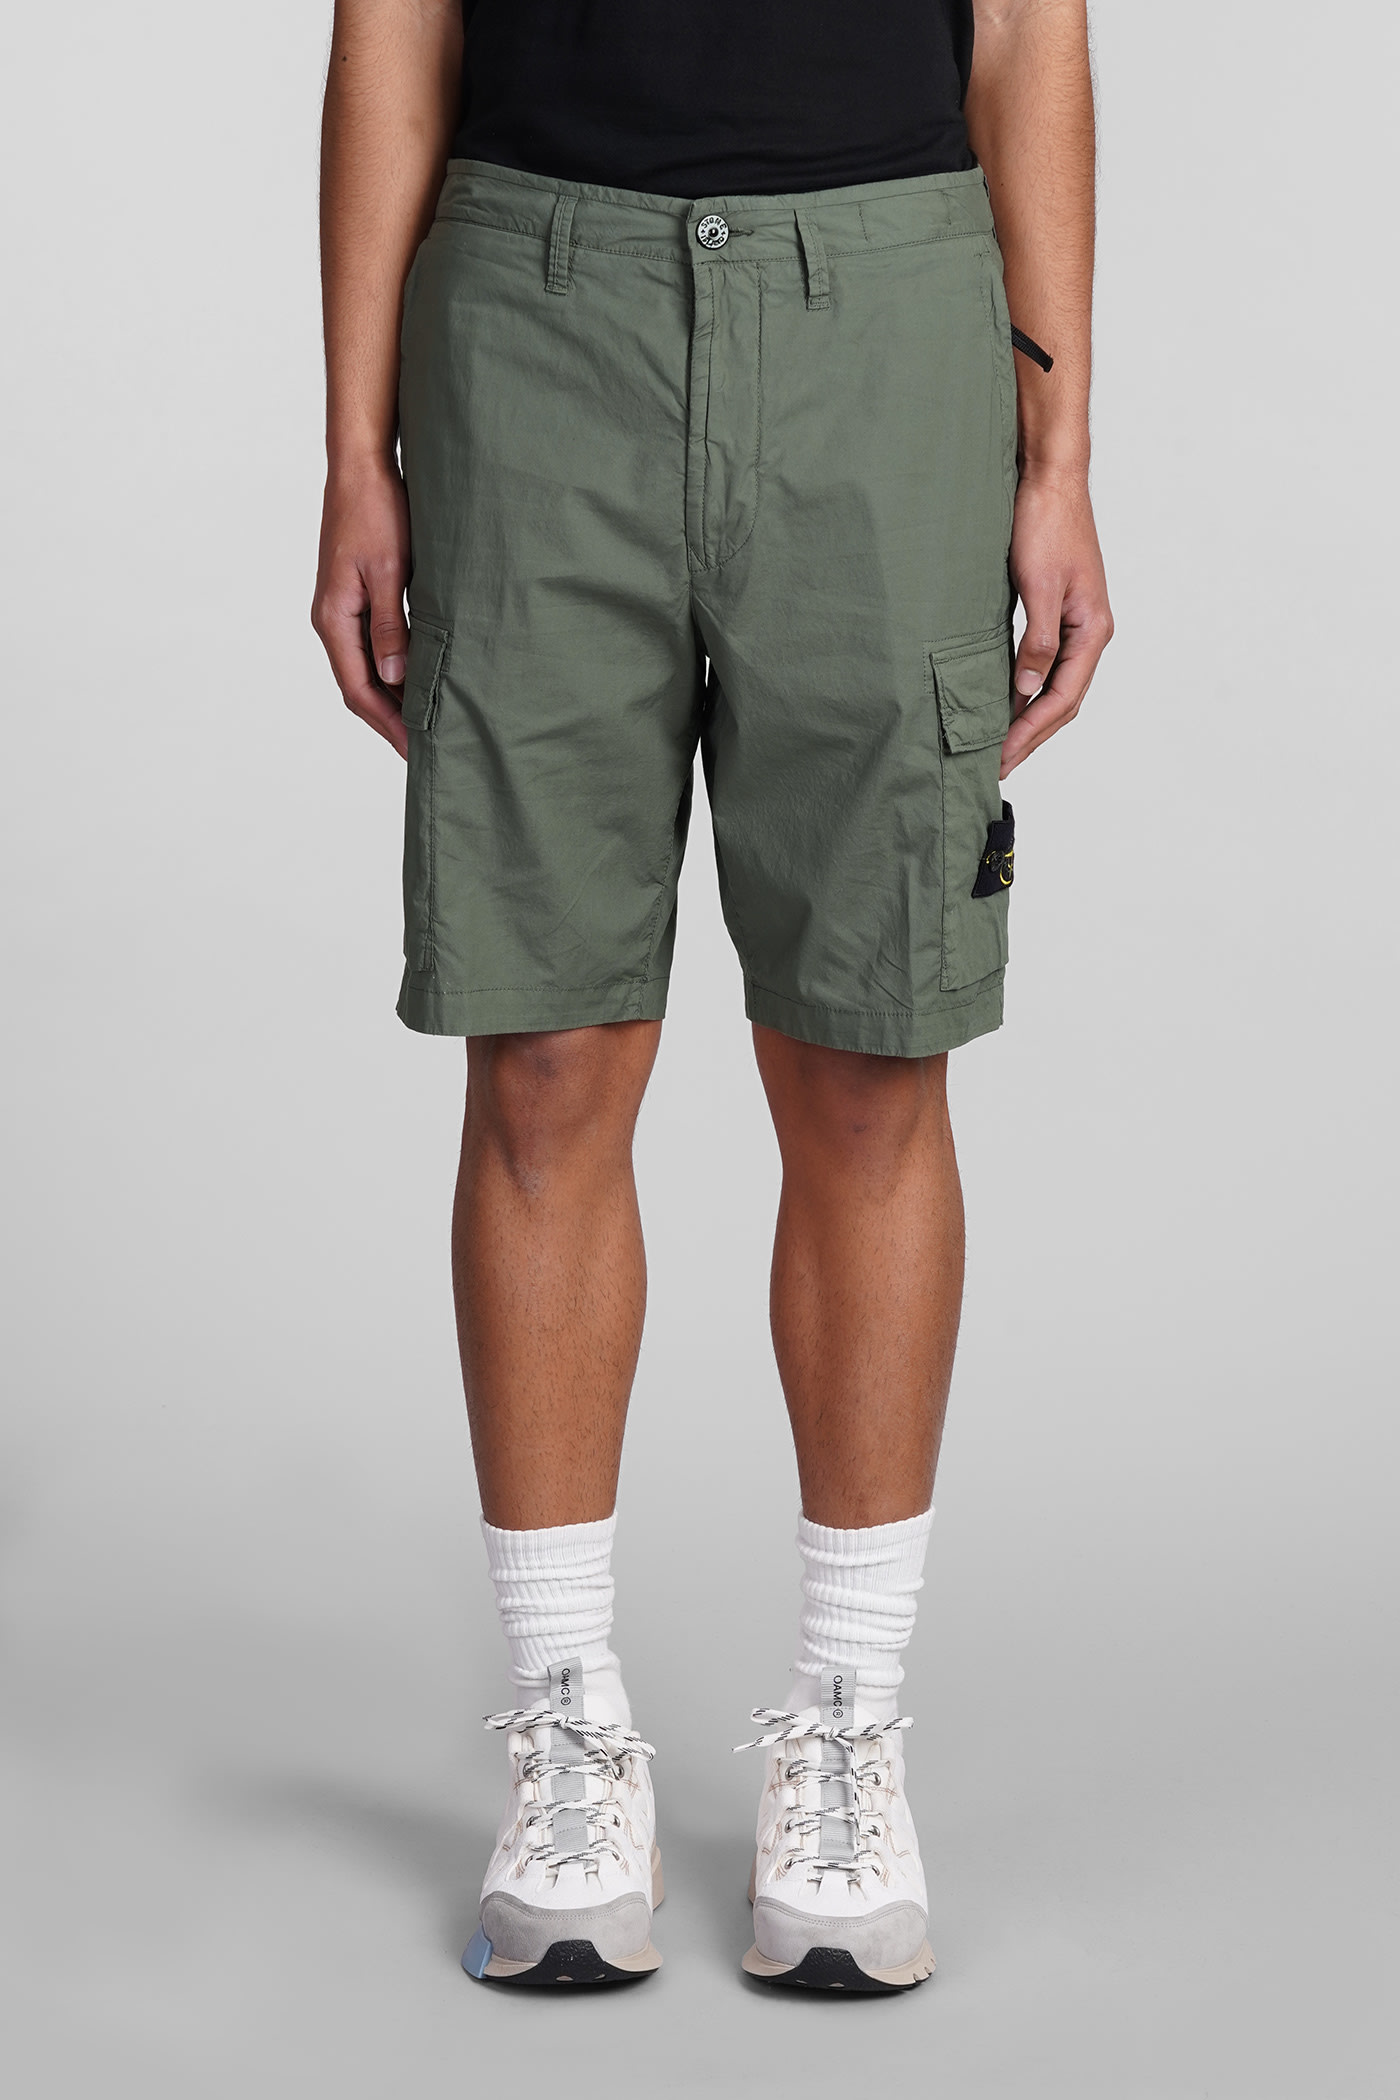 Stone Island Shorts In Green Cotton